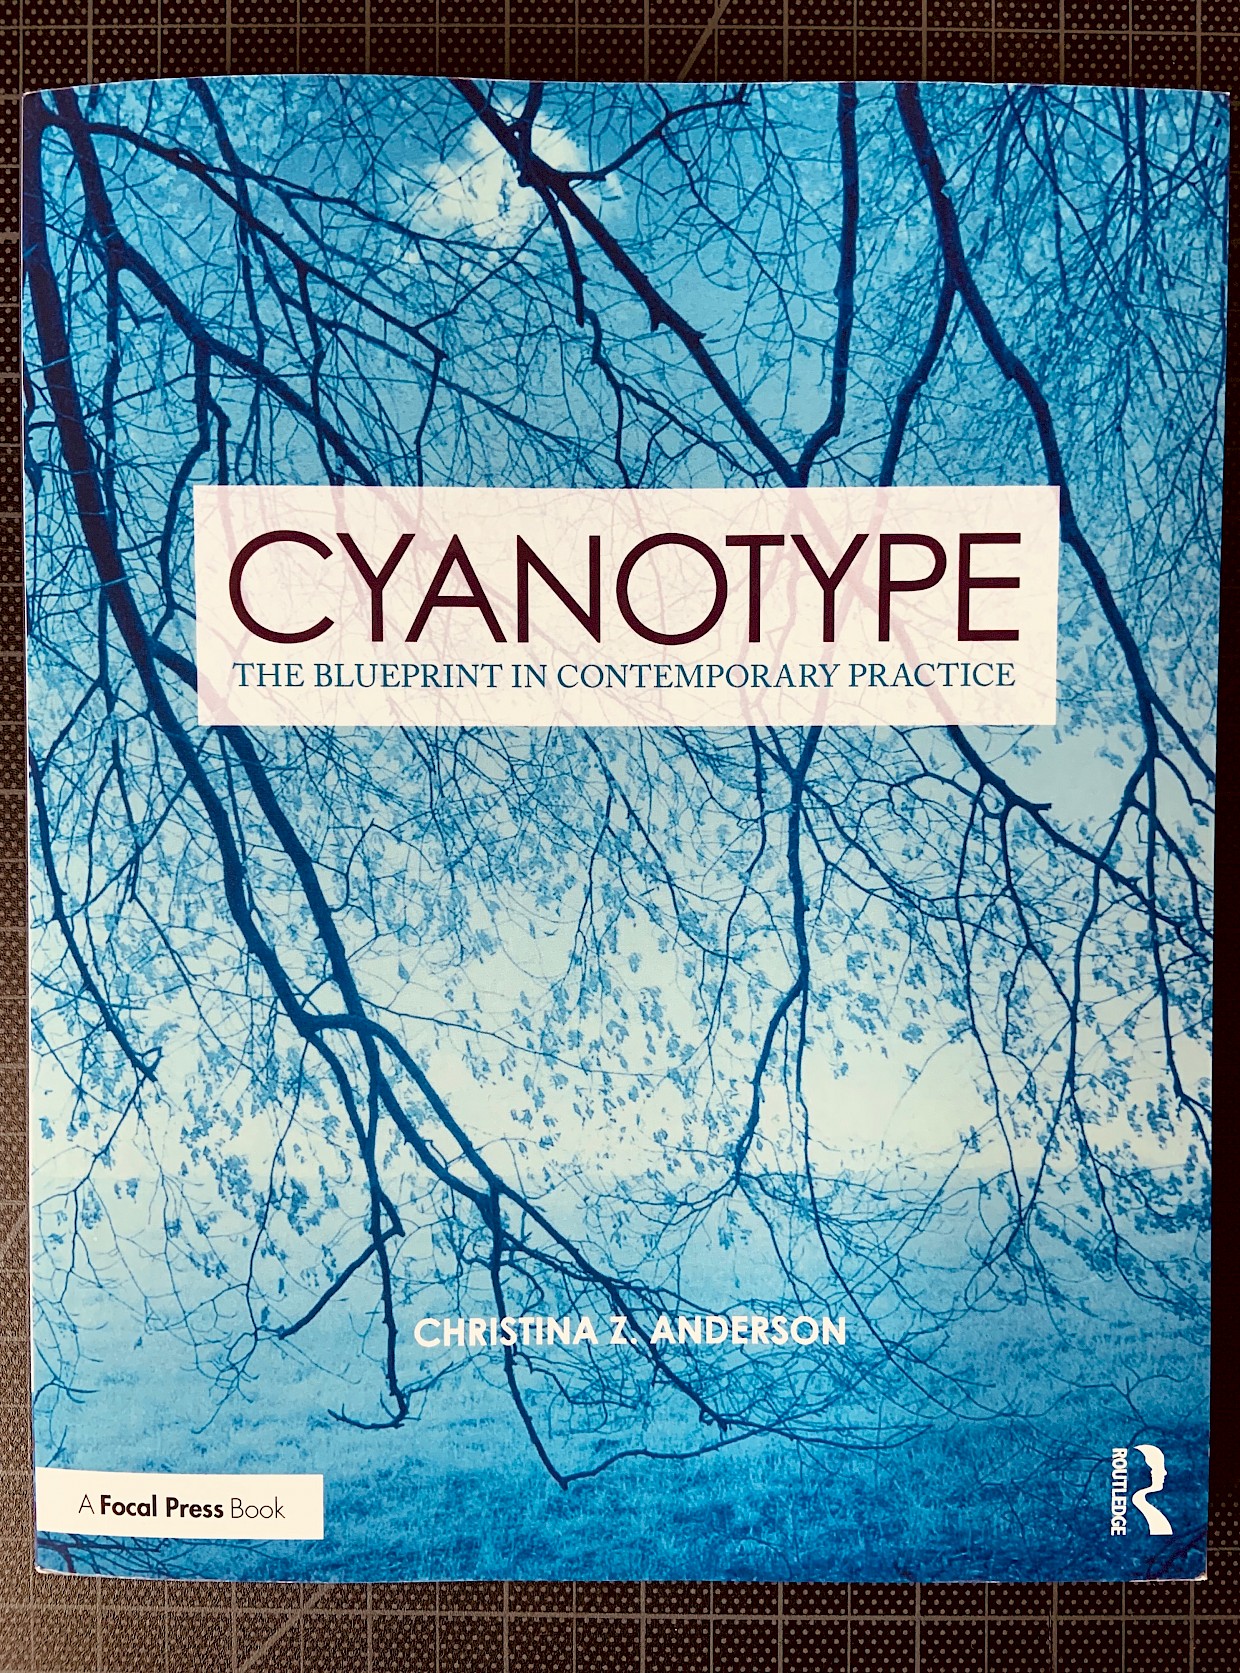 Cyanotype, The Blueprint in Contemporary Practice